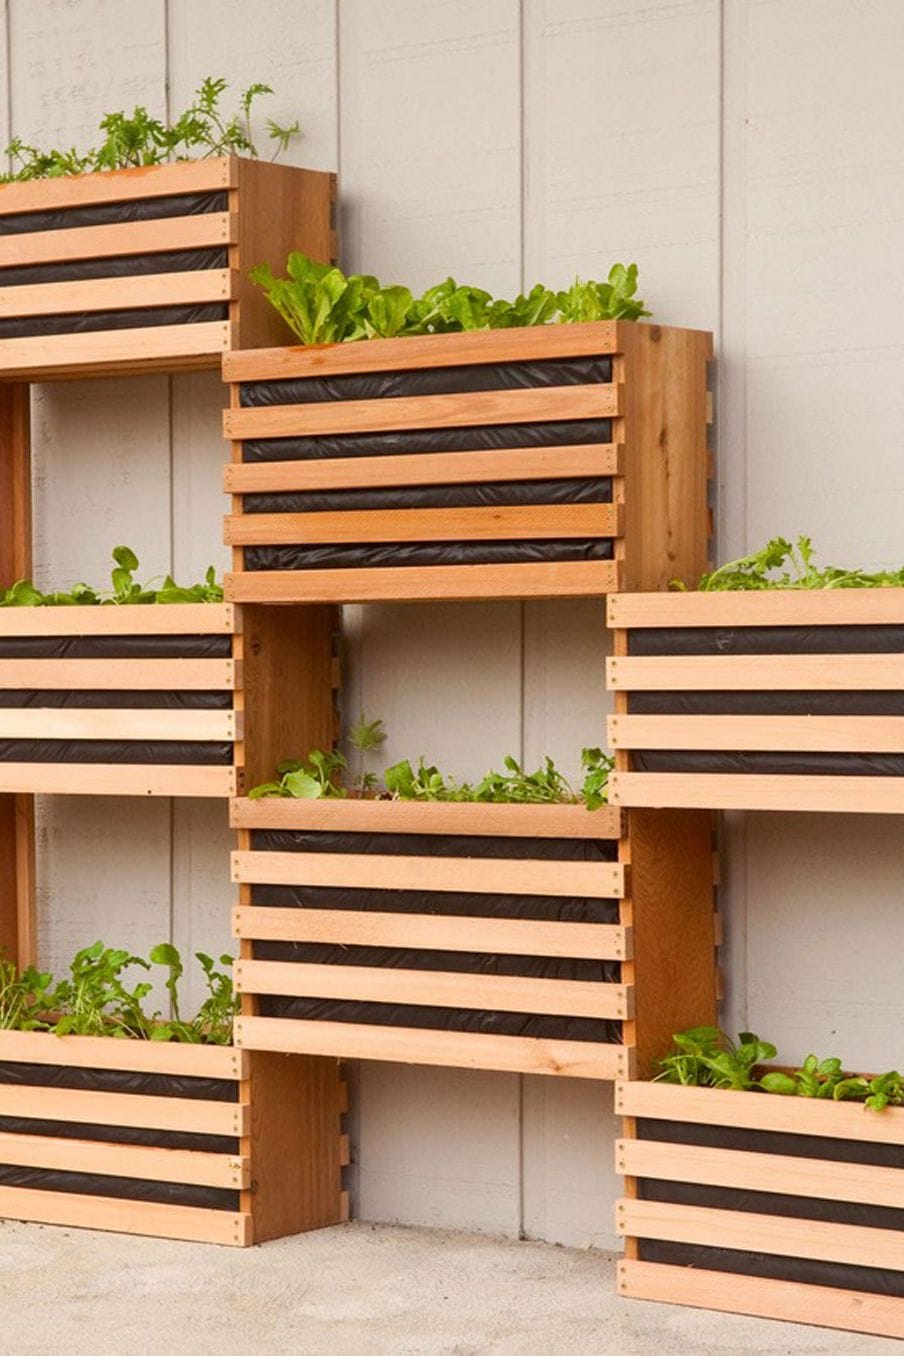 These wall veggie garden #verticalgarden